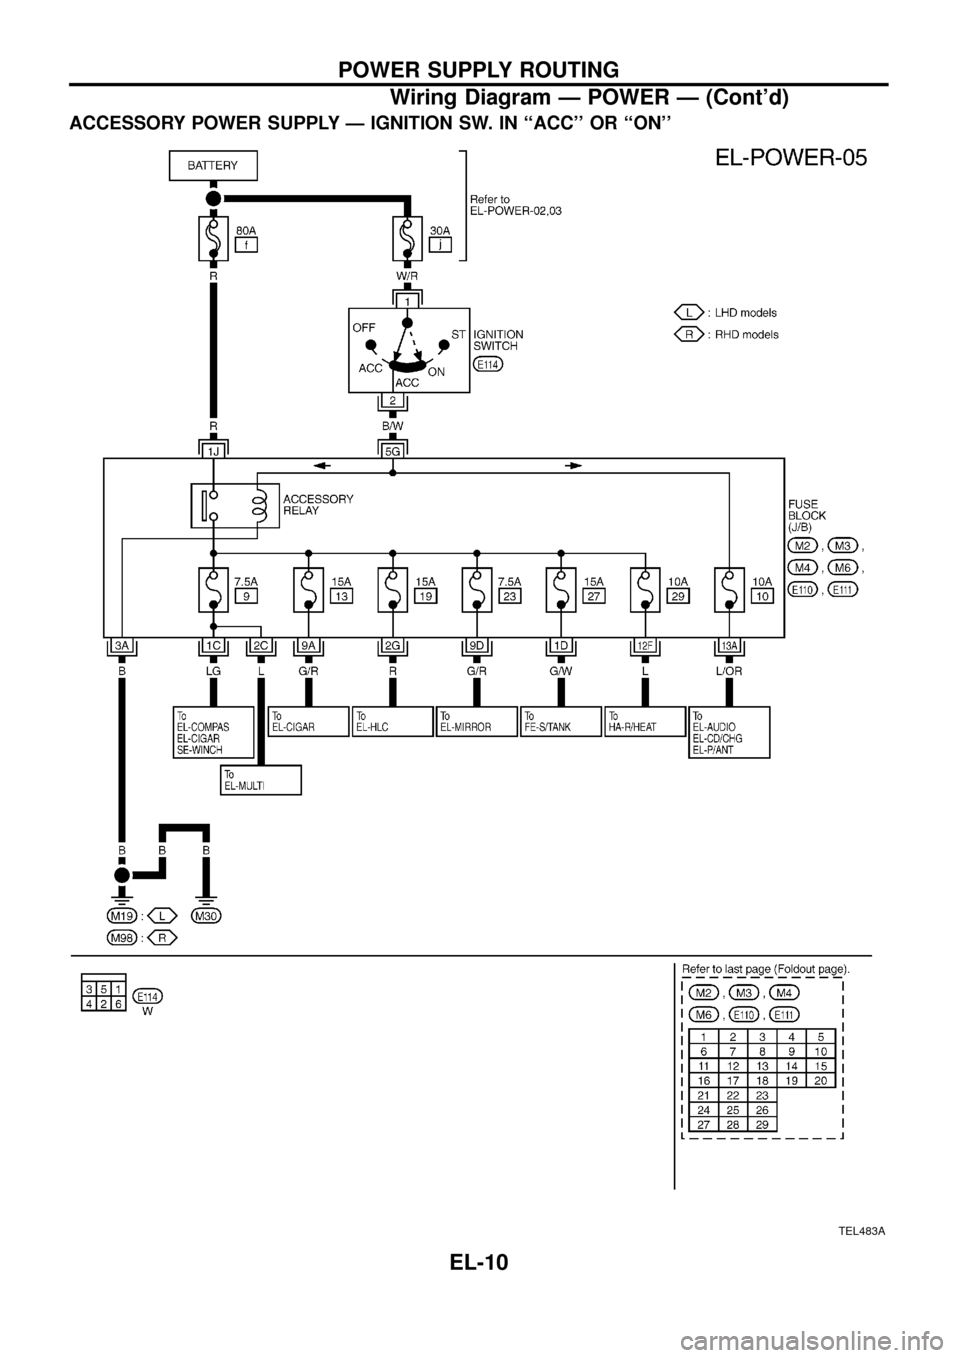 NISSAN PATROL 1998 Y61 / 5.G Electrical System Workshop Manual ACCESSORY POWER SUPPLY Ð IGNITION SW. IN ``ACC OR ``ON
TEL483A
POWER SUPPLY ROUTING
Wiring Diagram Ð POWER Ð (Contd)
EL-10 